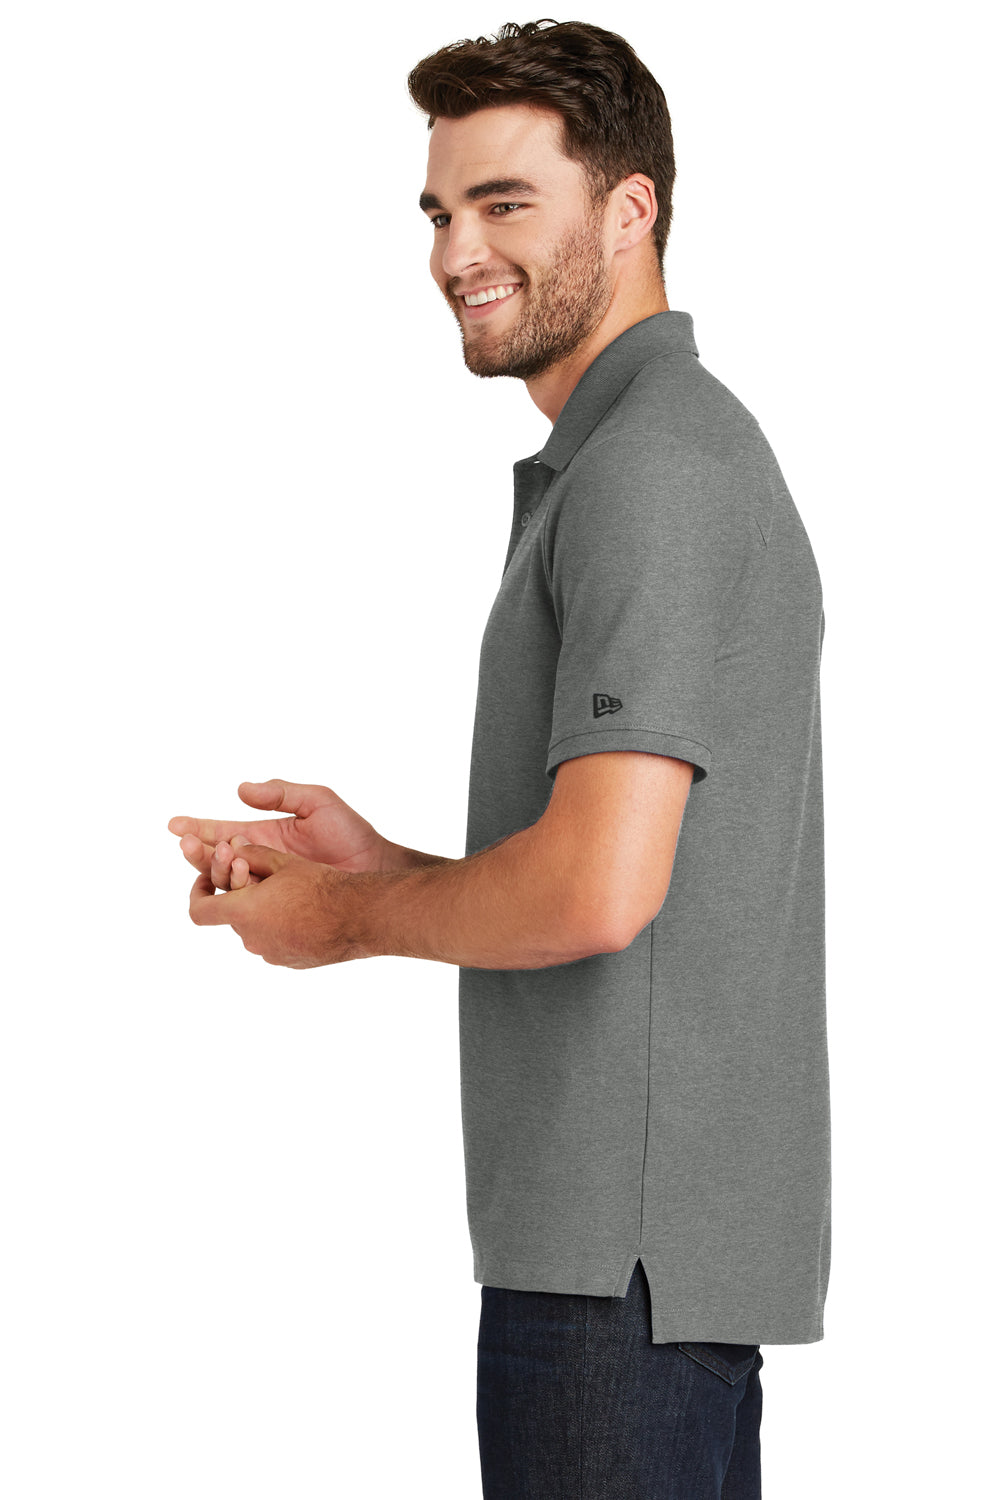 New Era NEA300 Mens Venue Home Plate Moisture Wicking Short Sleeve Polo Shirt Heather Graphite Grey Side